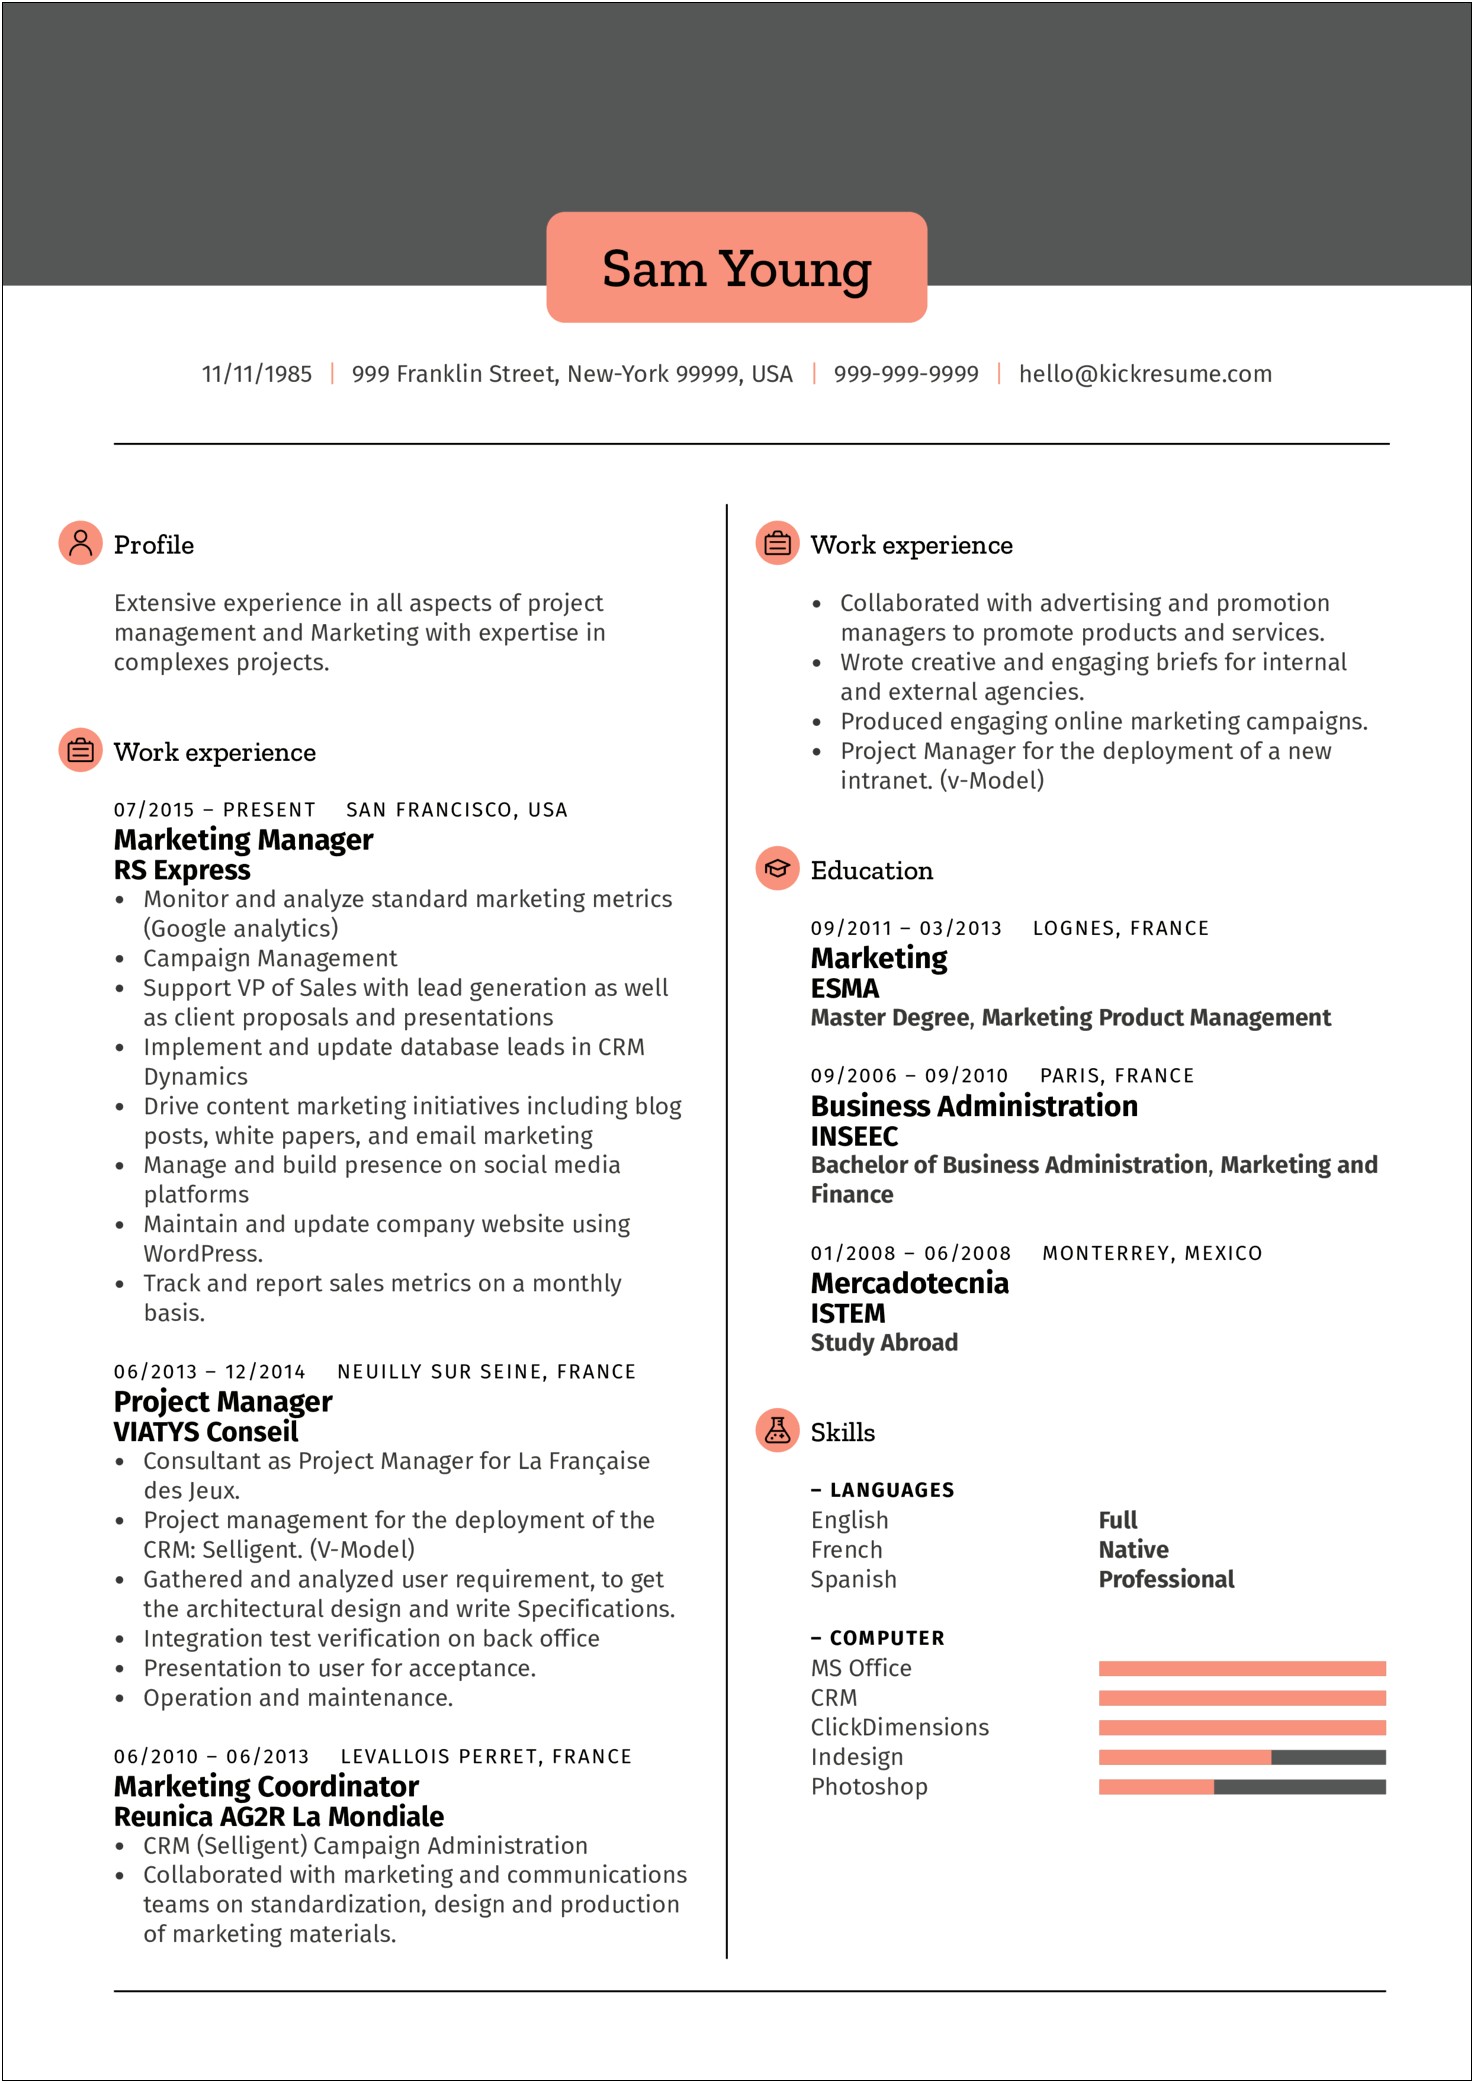 Back Office Job Description Resume